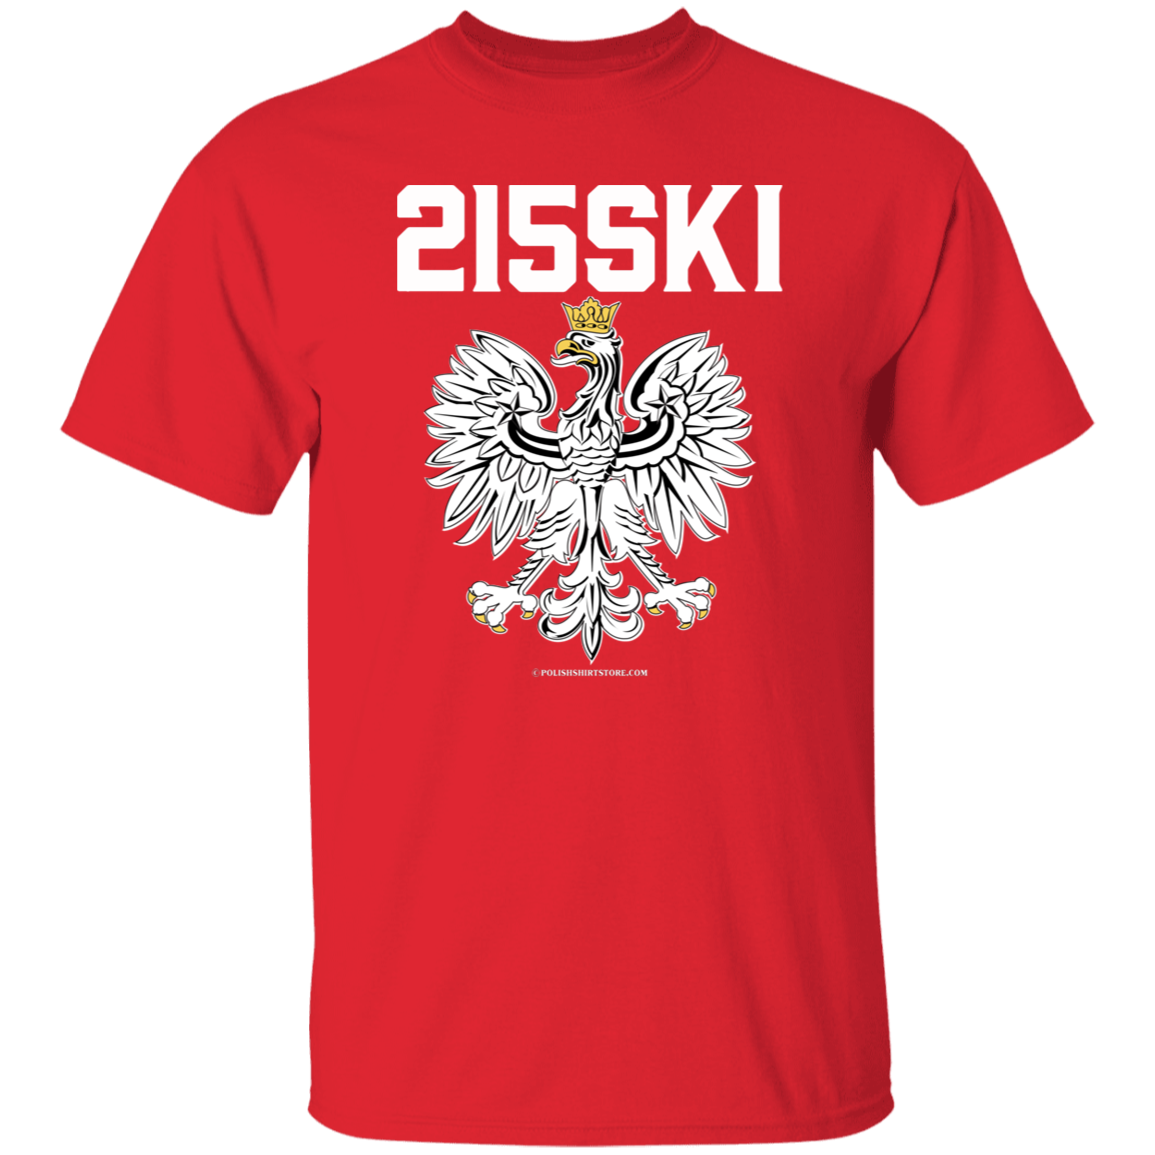 215SKI Area Code 215 Apparel CustomCat G500 5.3 oz. T-Shirt Red S